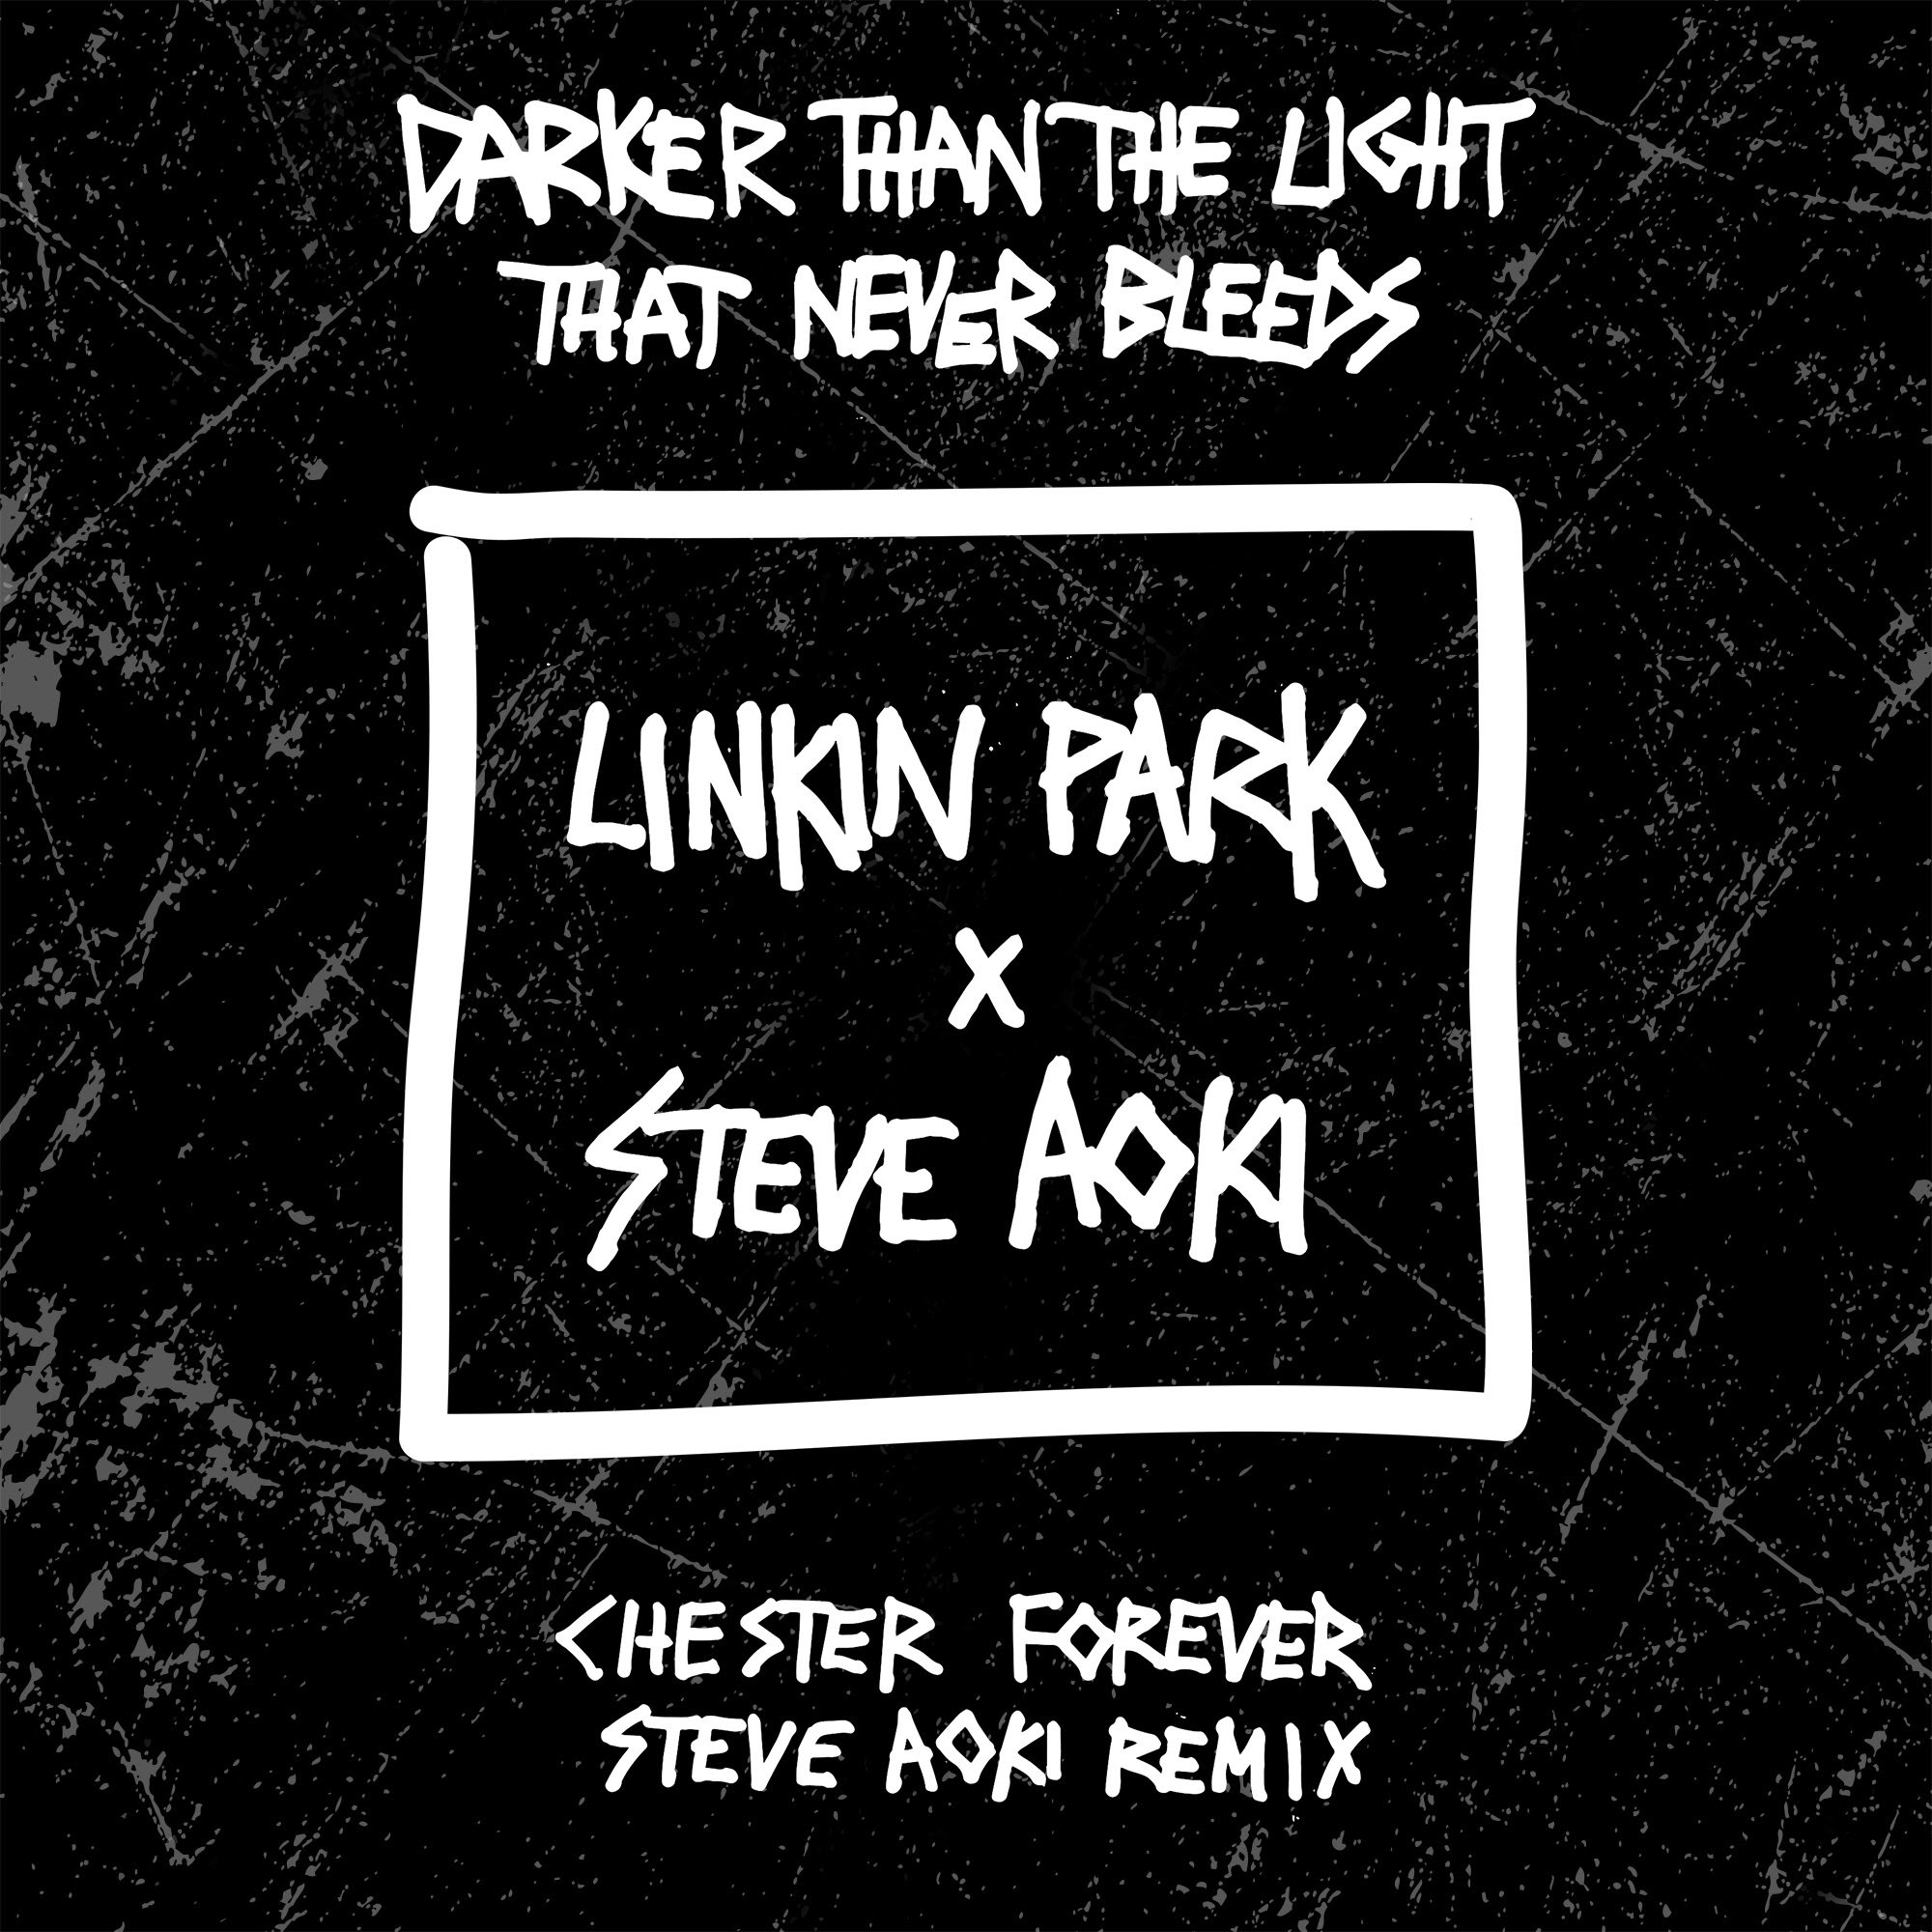 Aoki & Linkin Park Release “Darker Than The Light That Never Bleeds” (Chester Forever Steve Aoki Remix) in Memory of Chester Bennington.